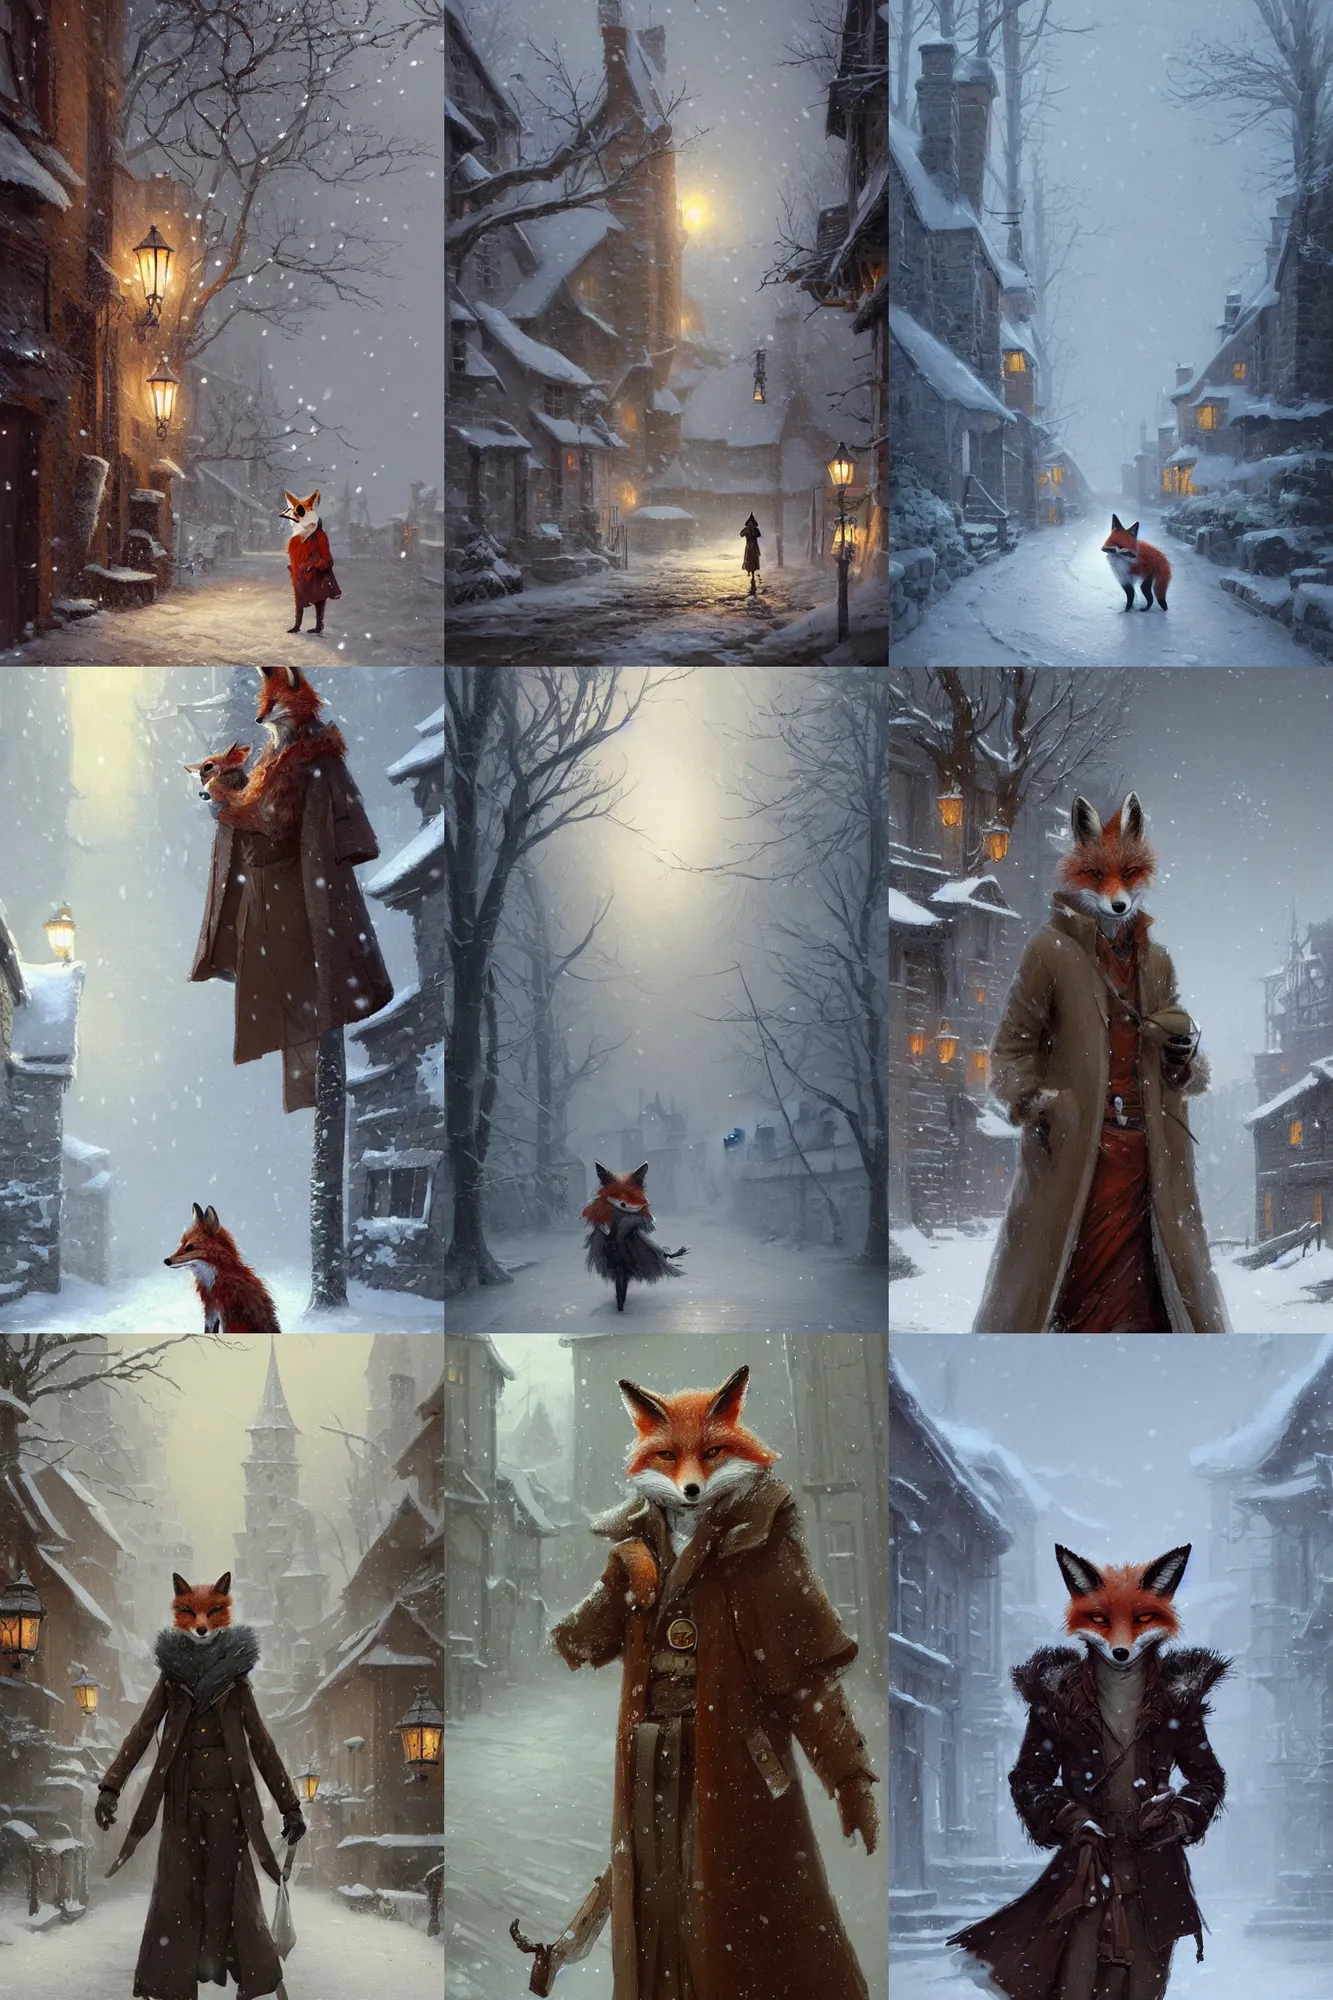 Prompt: an anthropomorhpic fox wearing a long coat in a snowy village, character illustration by greg rutkowski, thomas kinkade, artstation